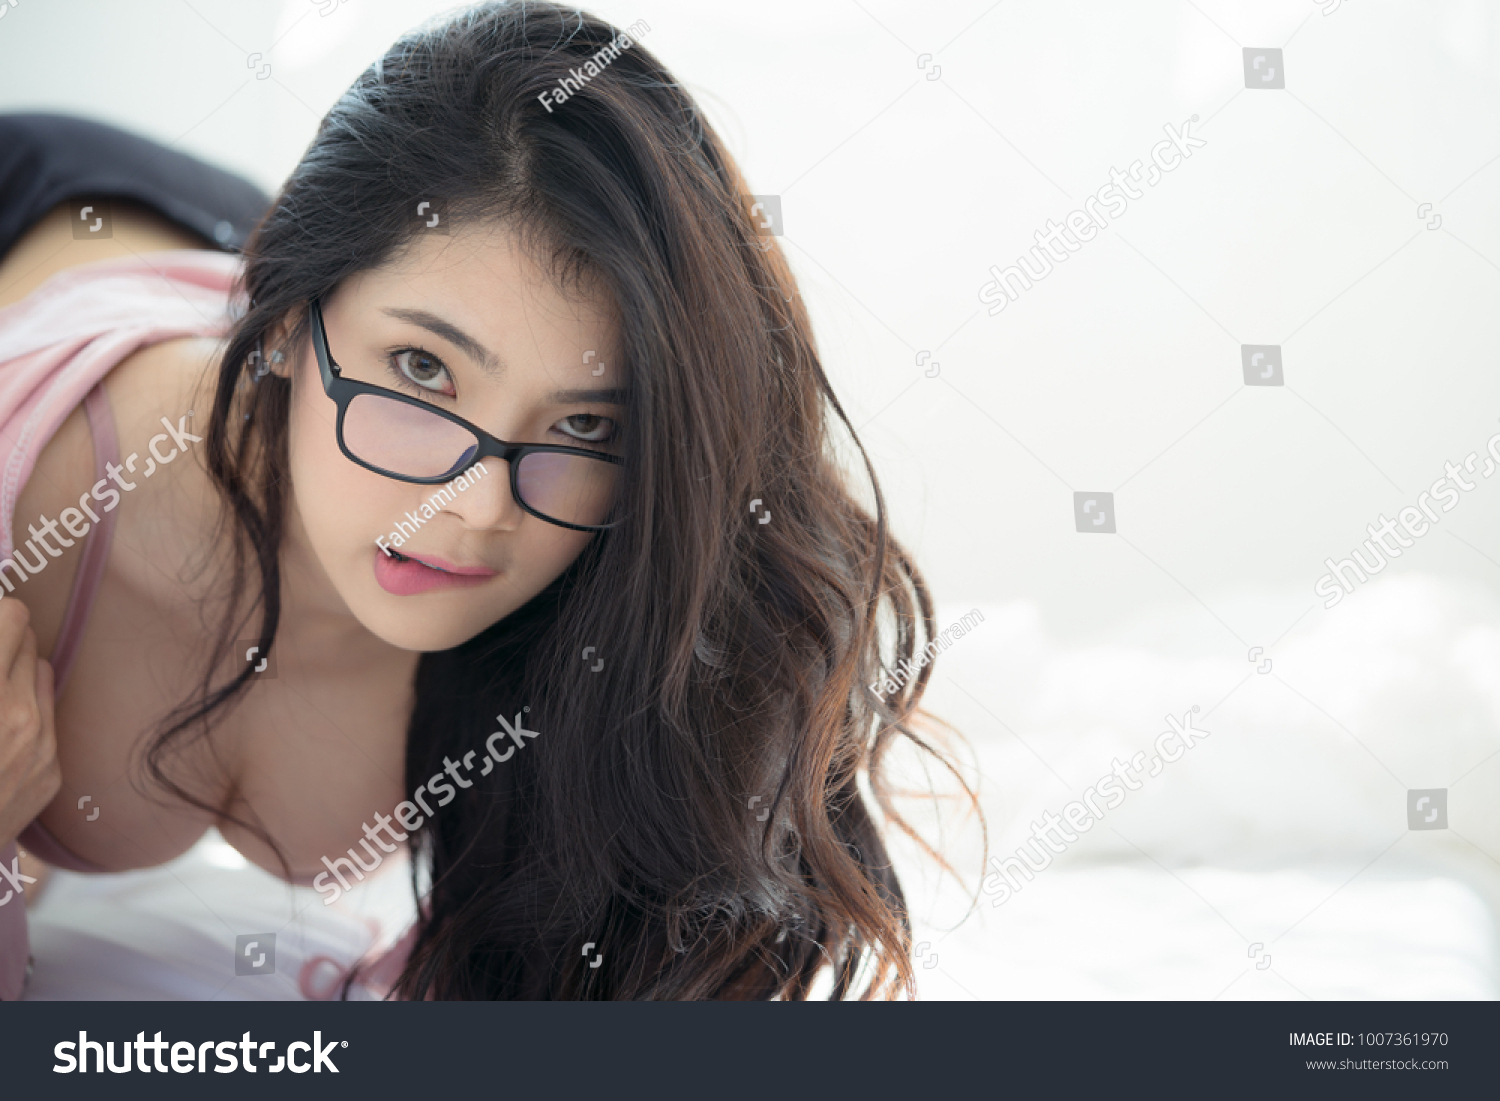 Sexy Beautiful Asian Girls